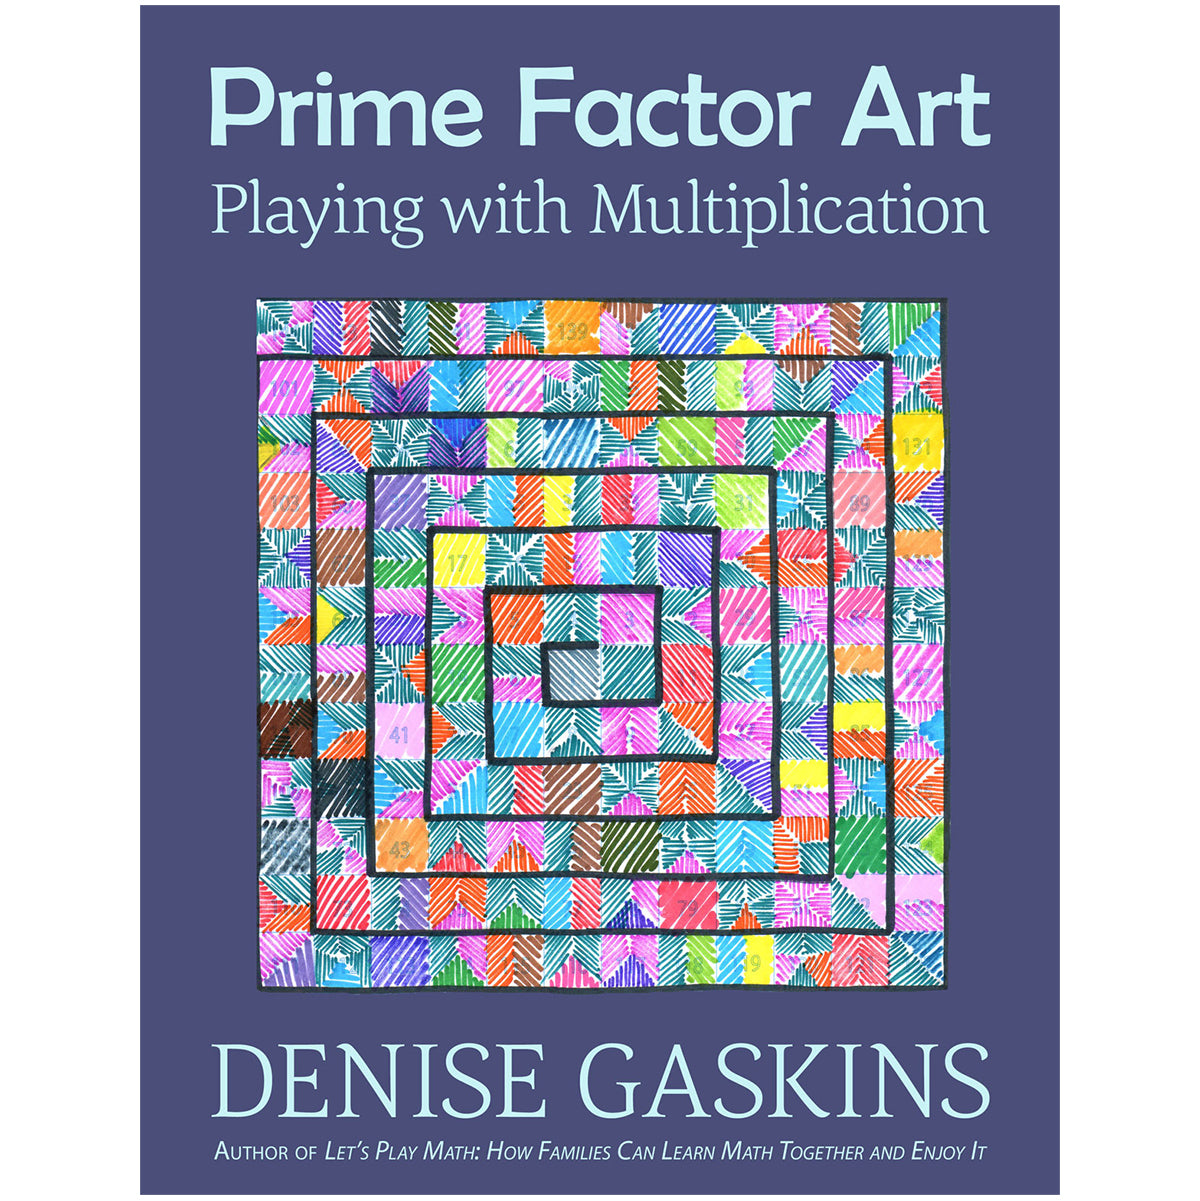 Prime Factor Art multiplication printable math activity book by Denise Gaskins